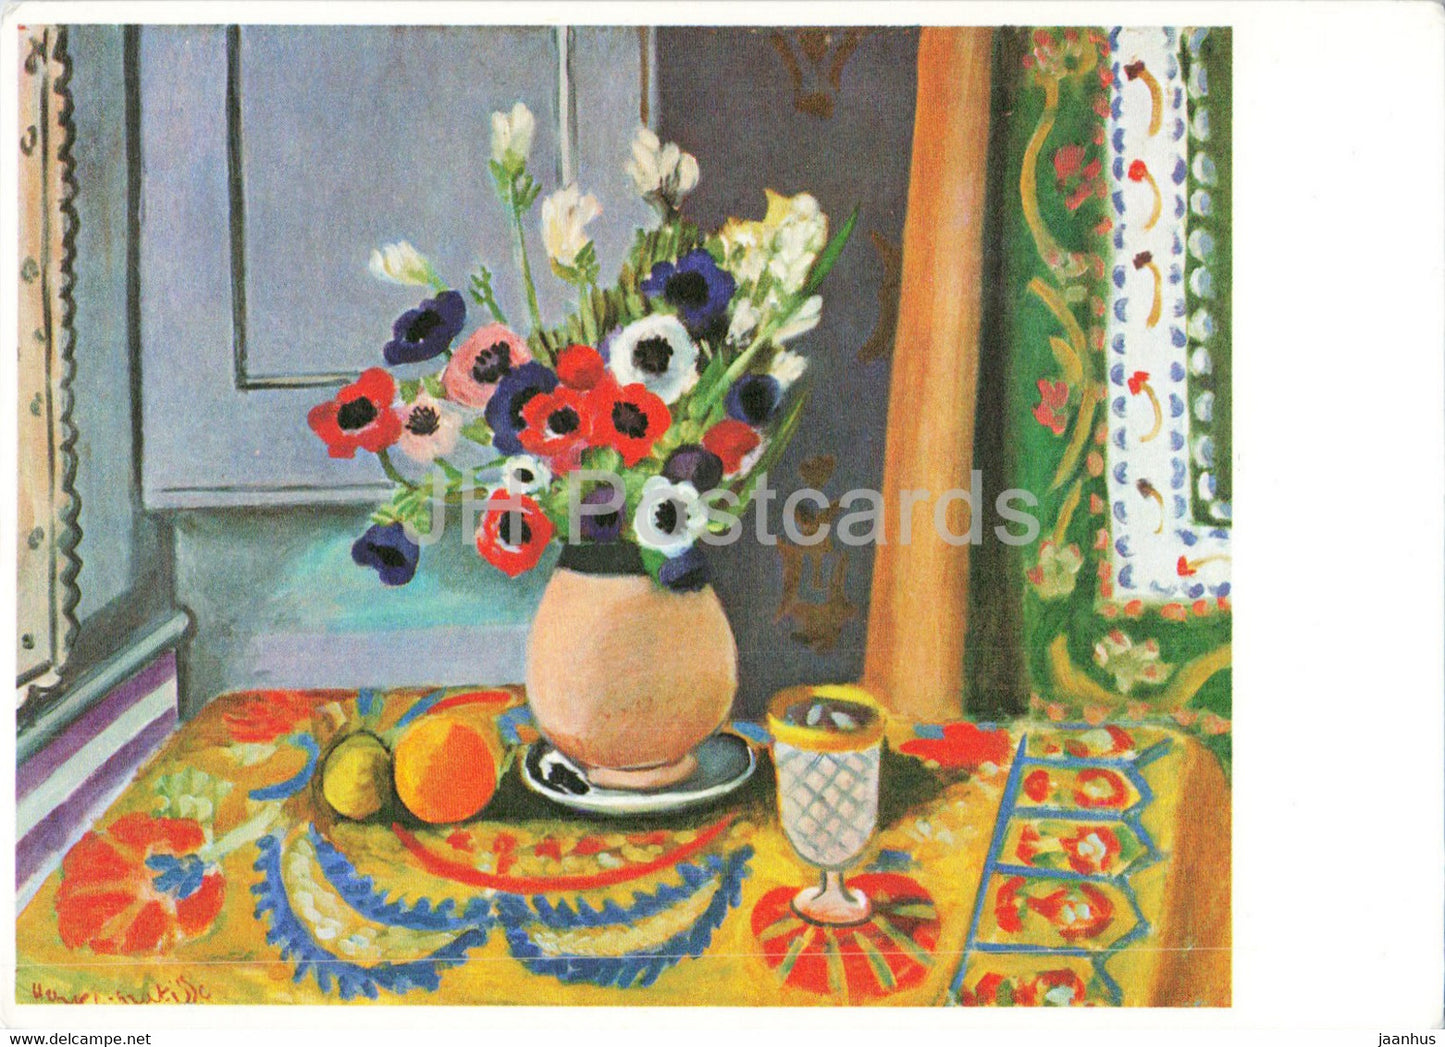 painting by Henri Matisse - Die Anemonen - Anemone - flowers - French art - Switzerland - unused - JH Postcards